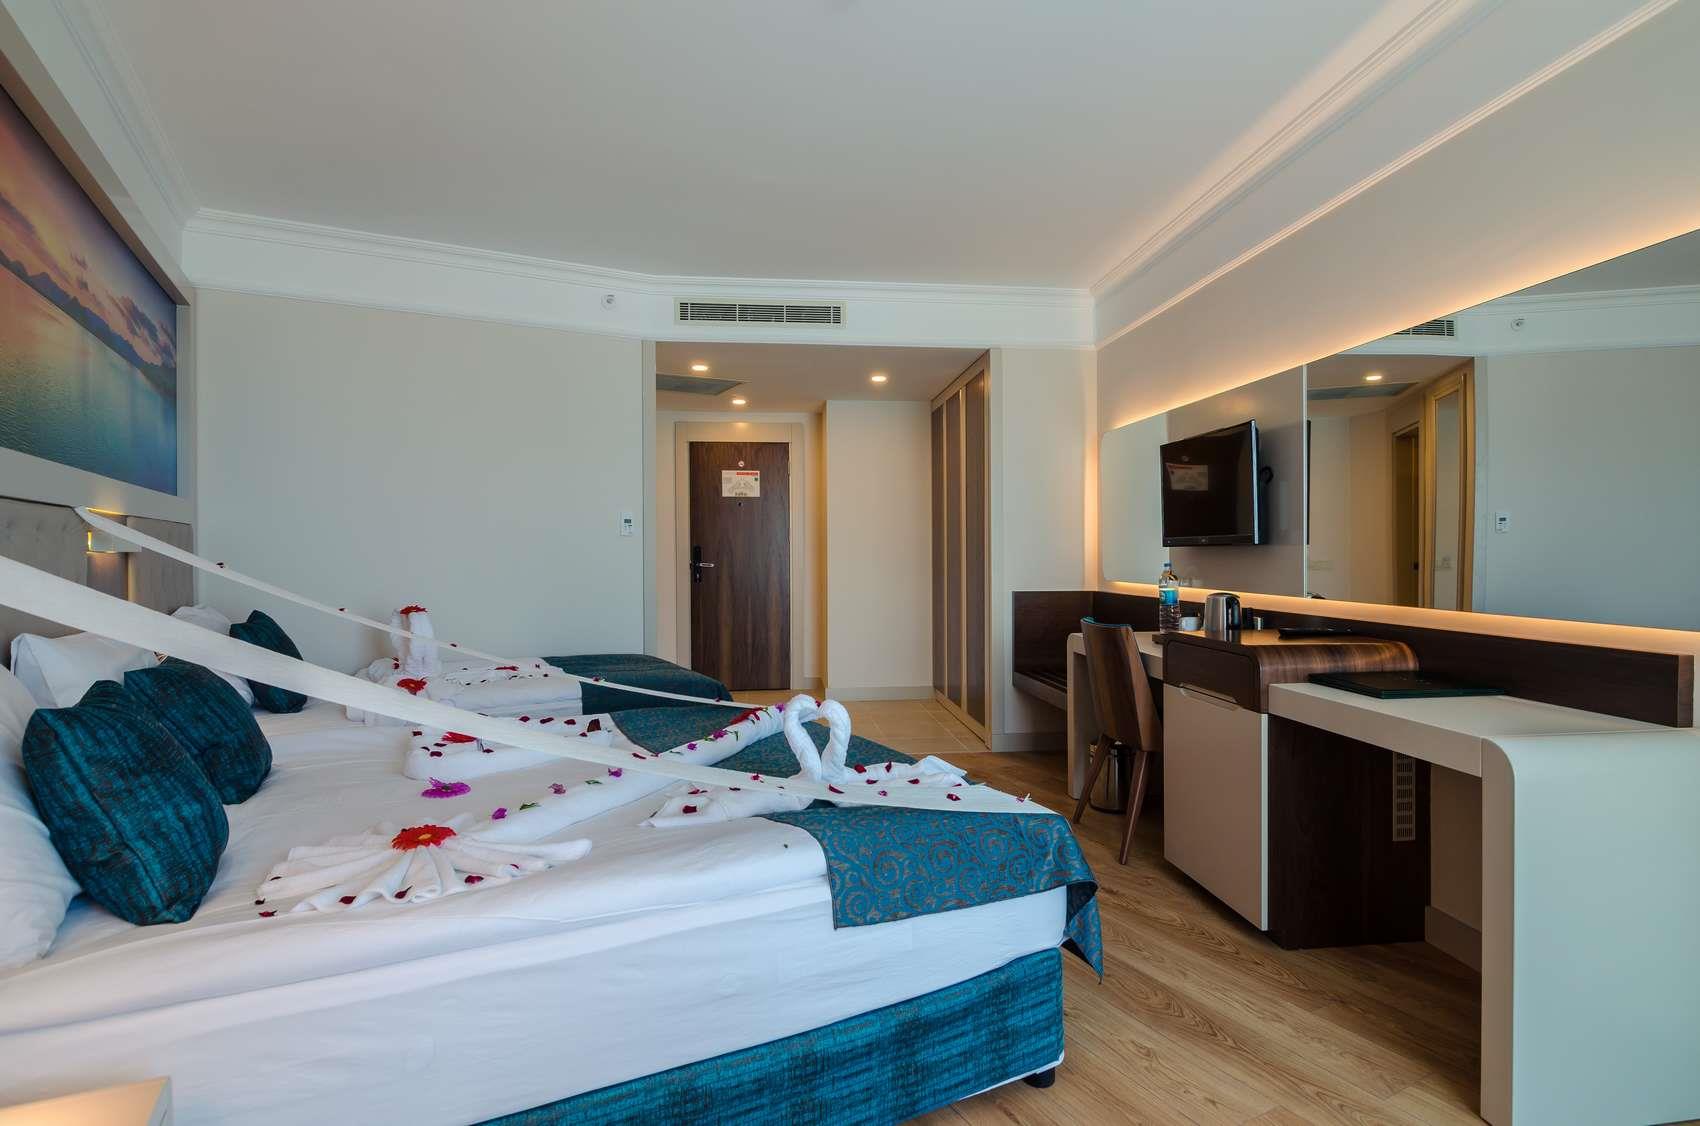 The Lumos Deluxe Resort Hotel & Spa 5*